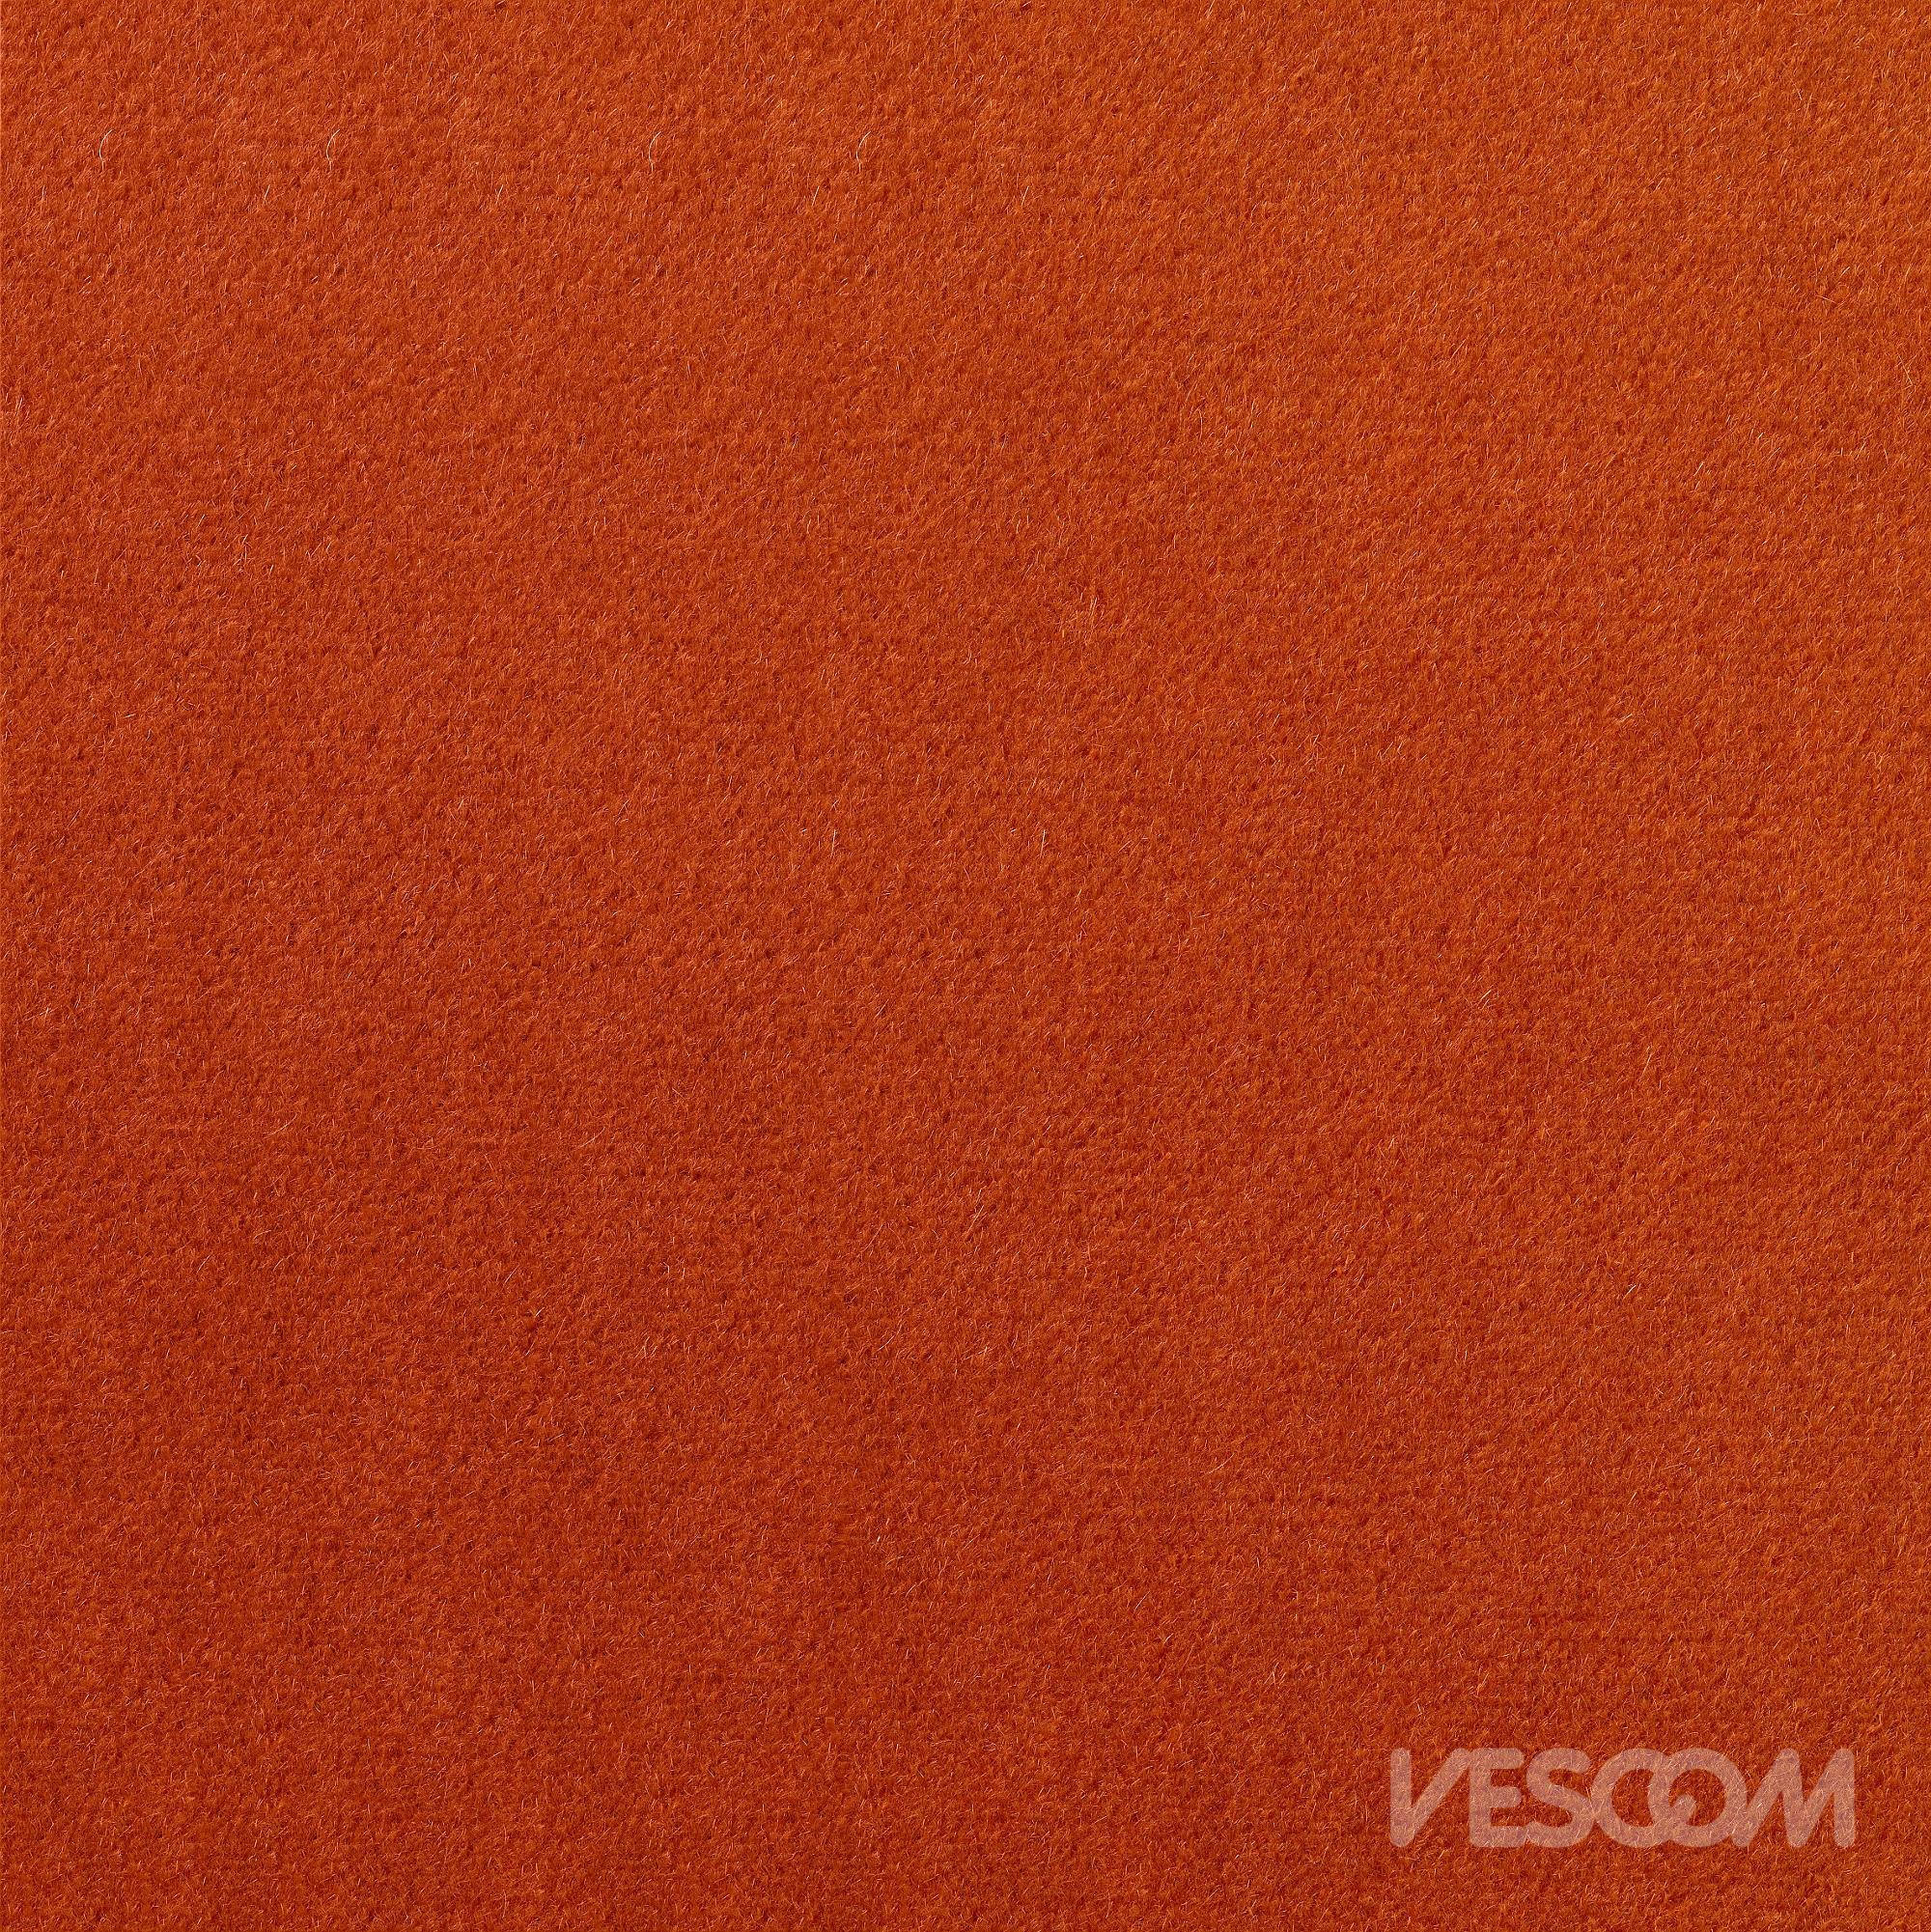 Vescom Ariana Upholstery Fabric 7061.25